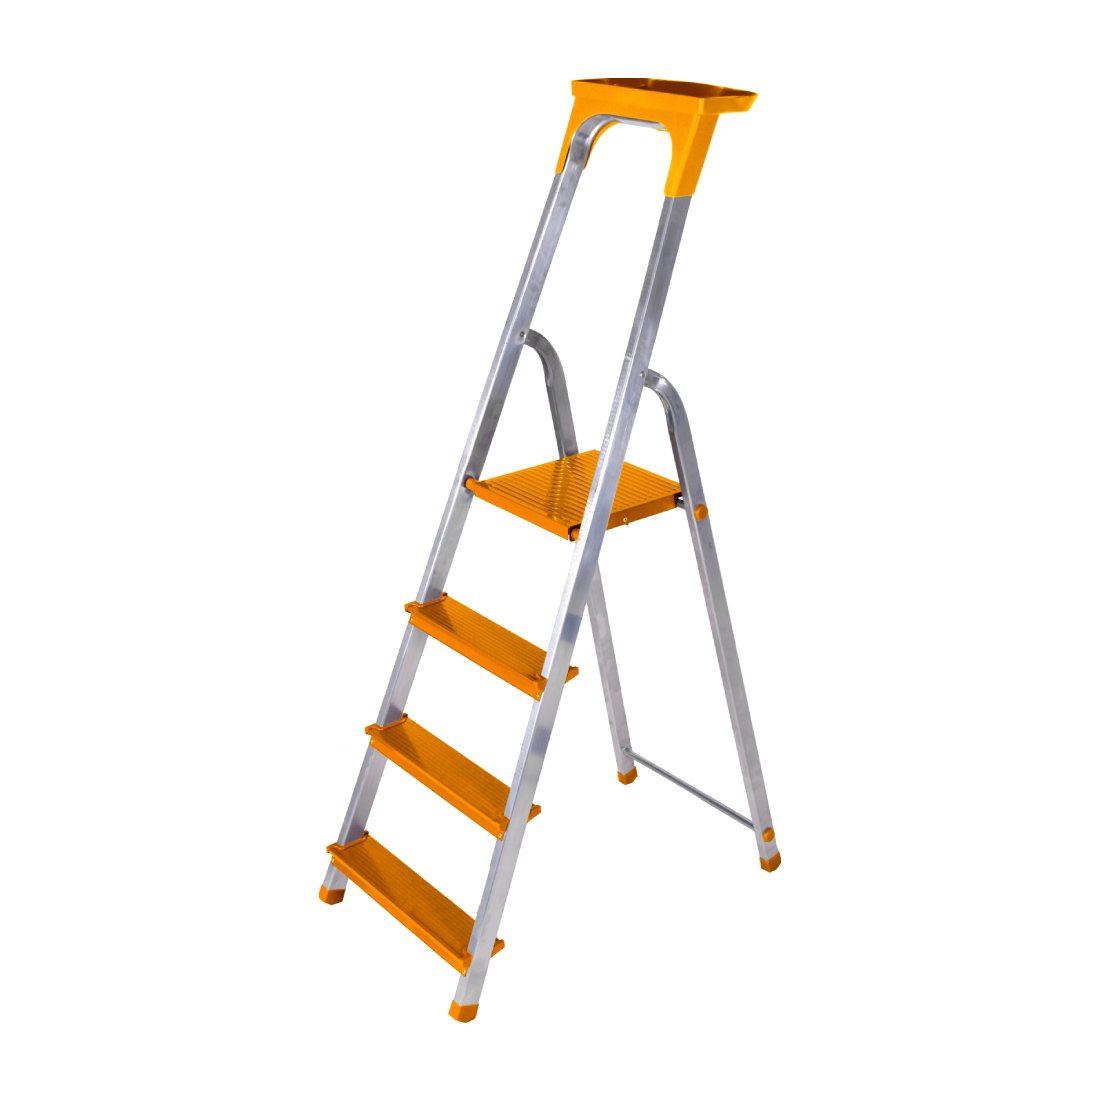 9 ft. Reach PeloStep Type IA Aluminum Platform Ladder, Yellow - 330 lbs. Load Capacity